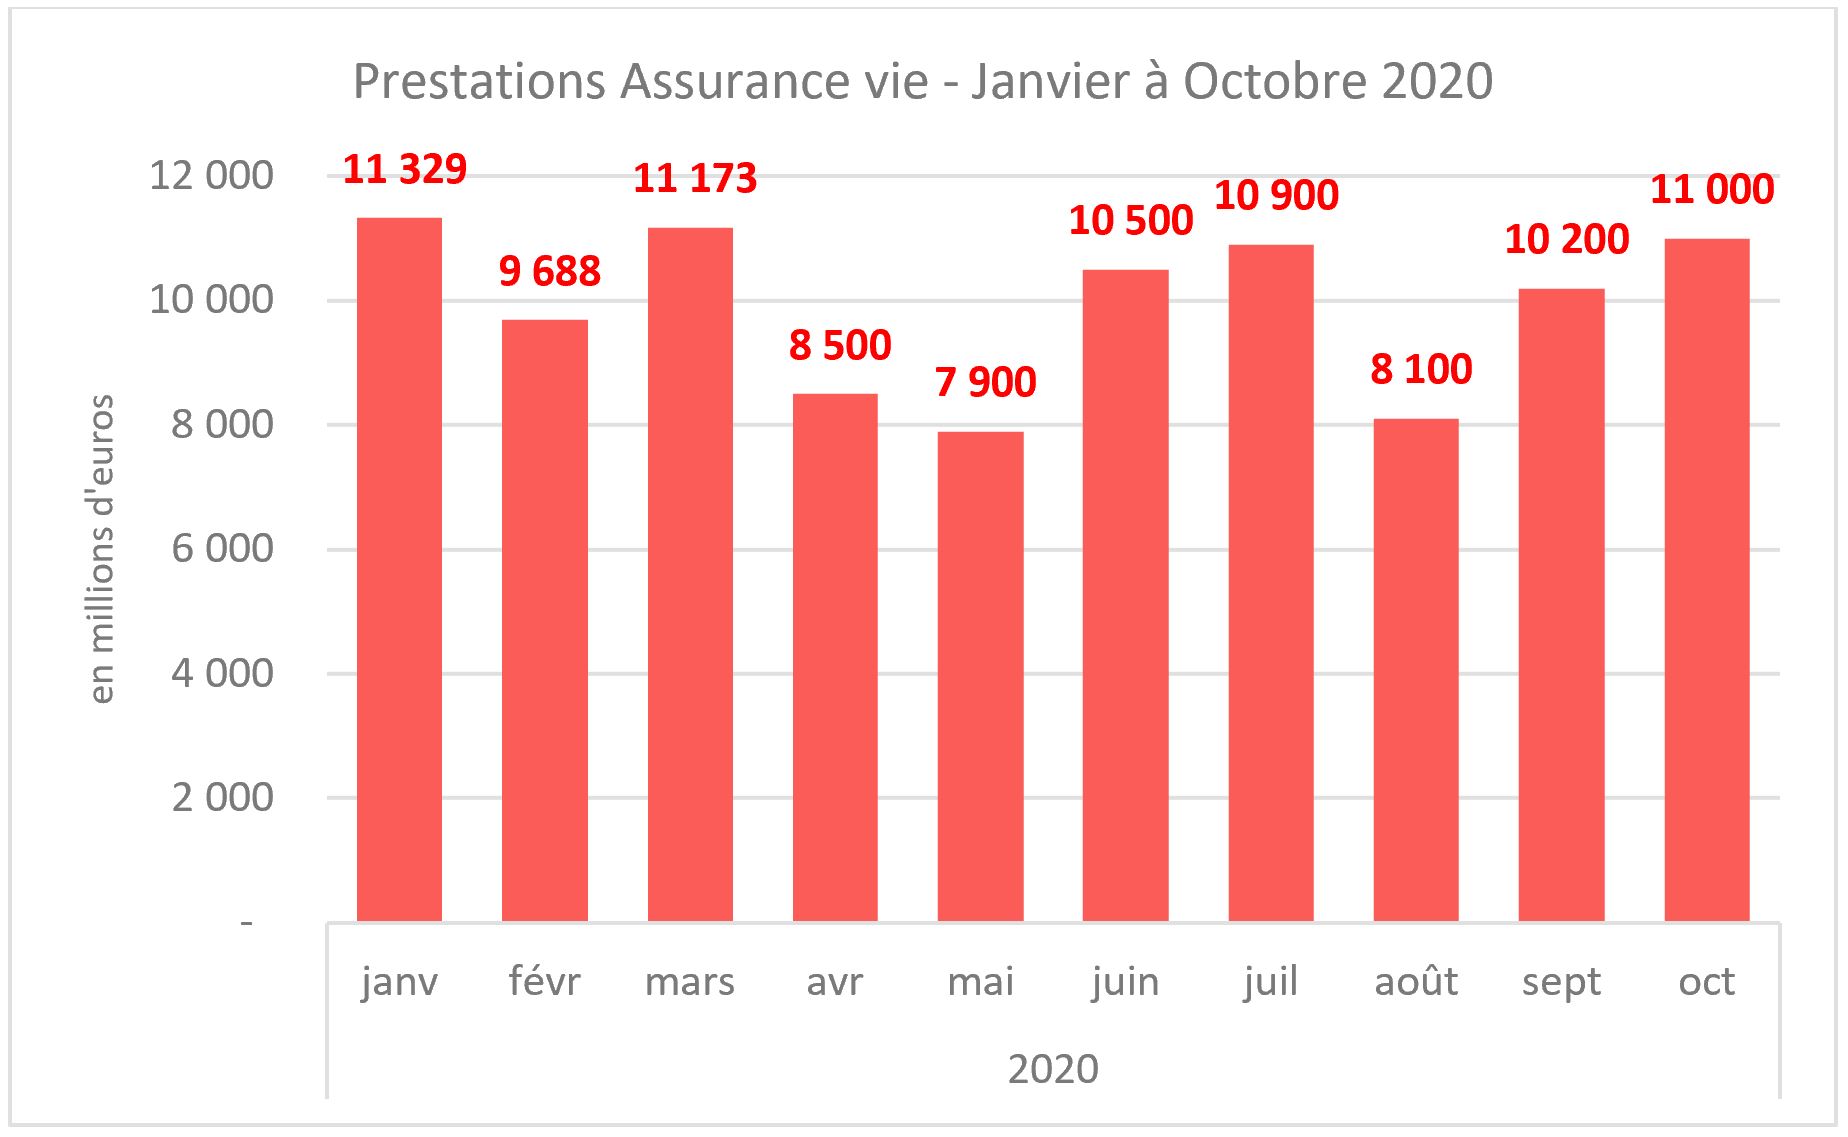 Prestations assurance vie Janv-Oct 2020 - Source FFA